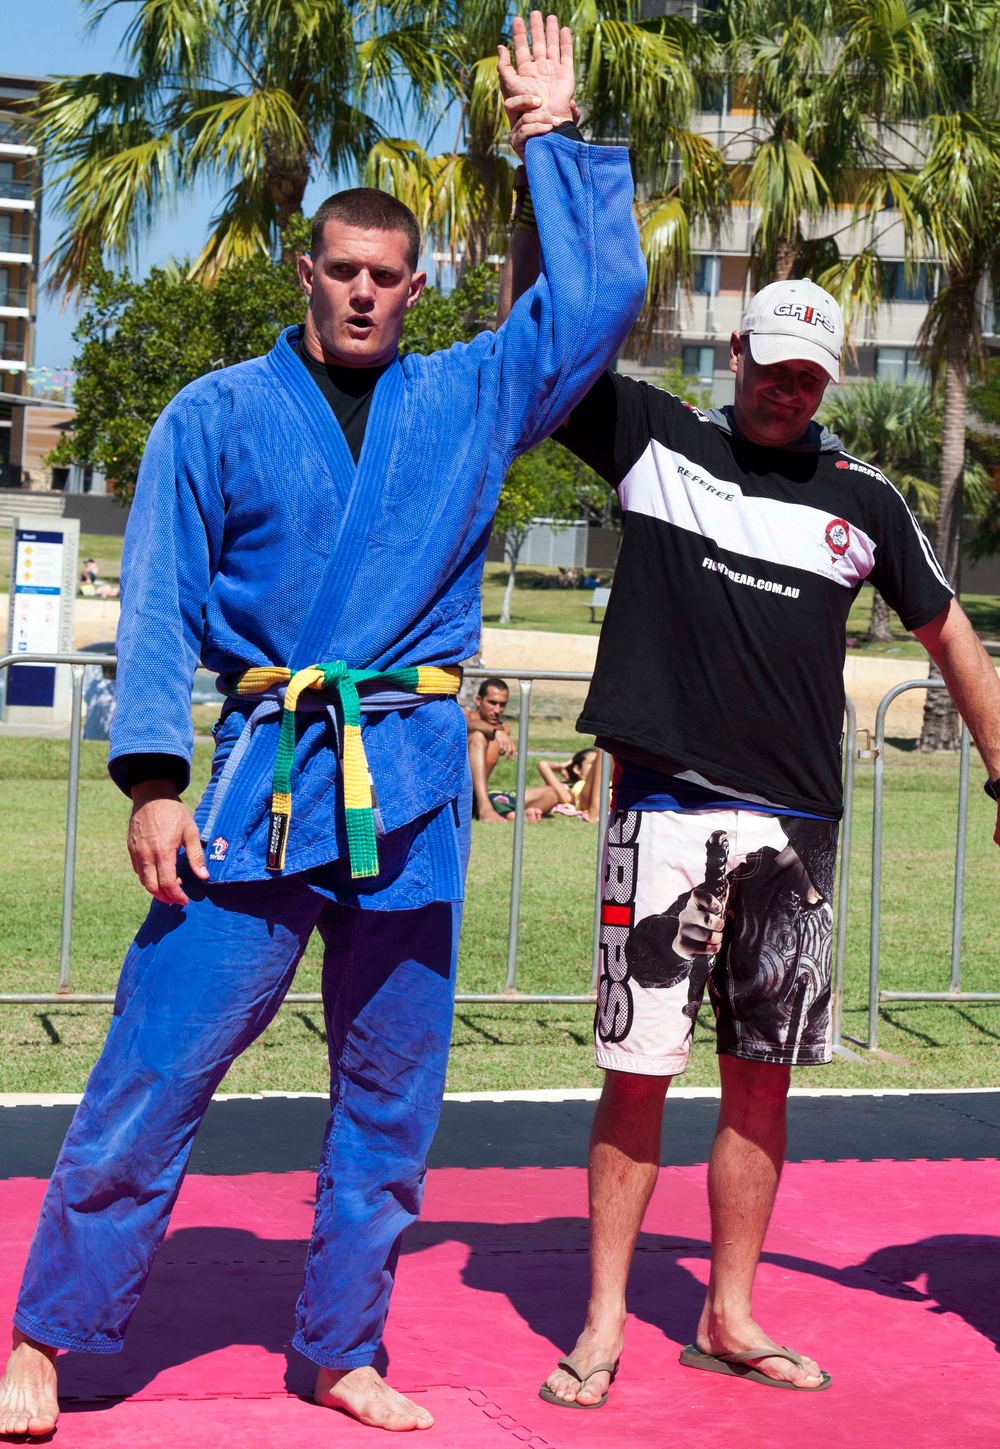 Jiu-jitsu tournament with local Australians, U.S. Marine